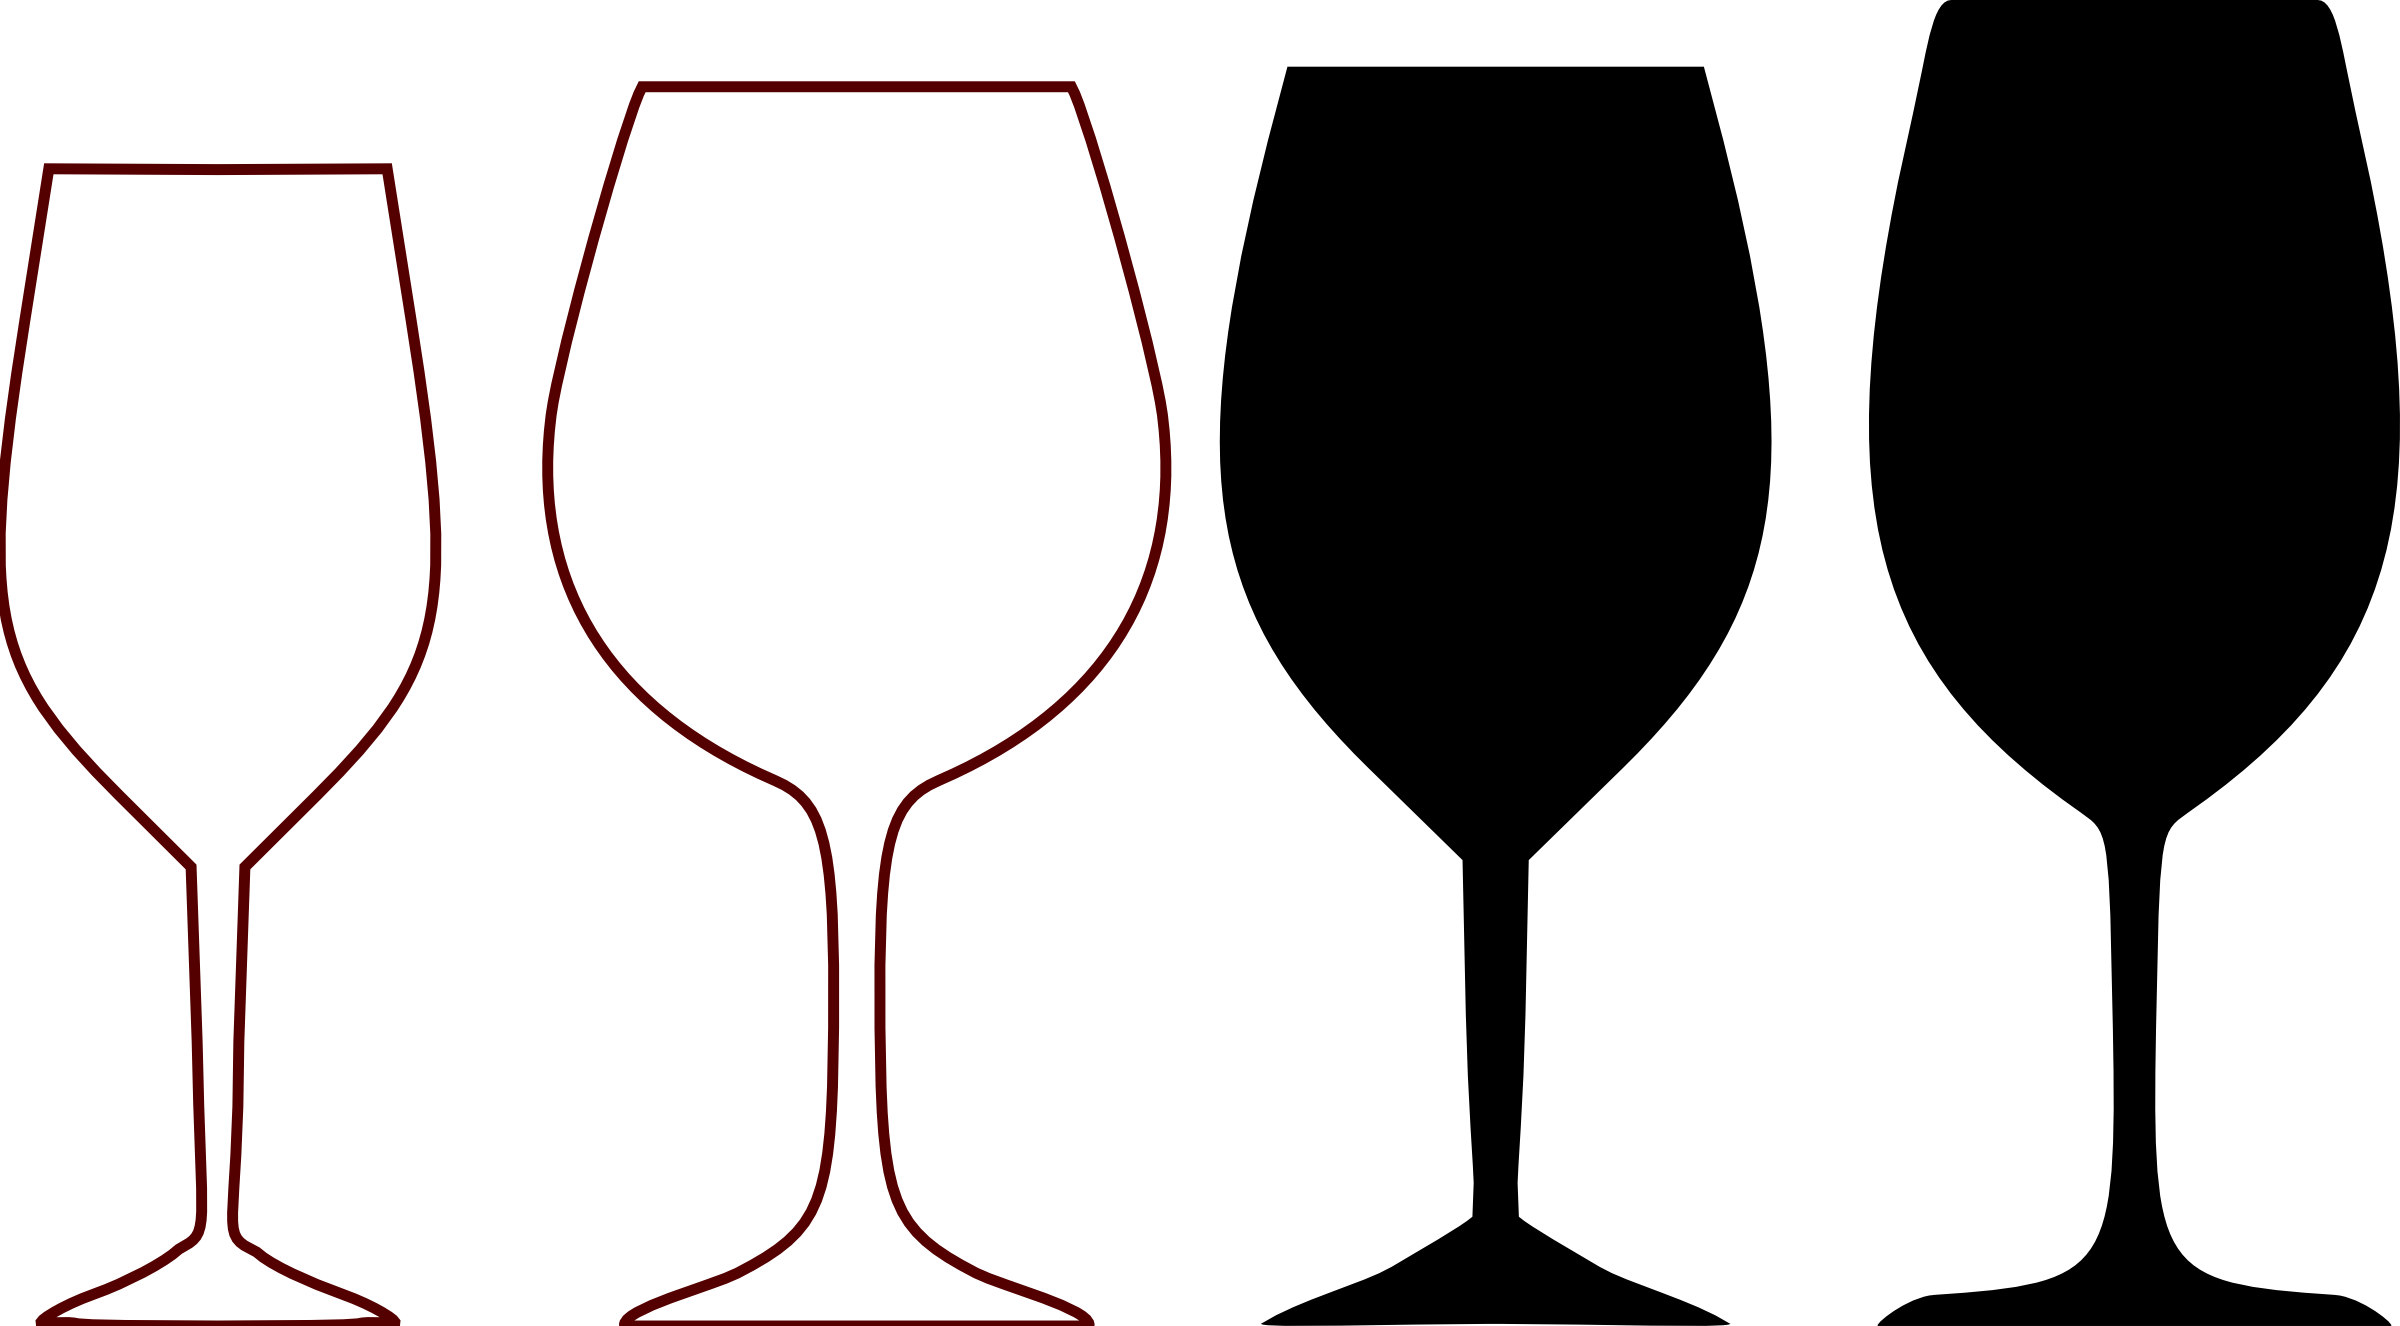 Wine Clipart 